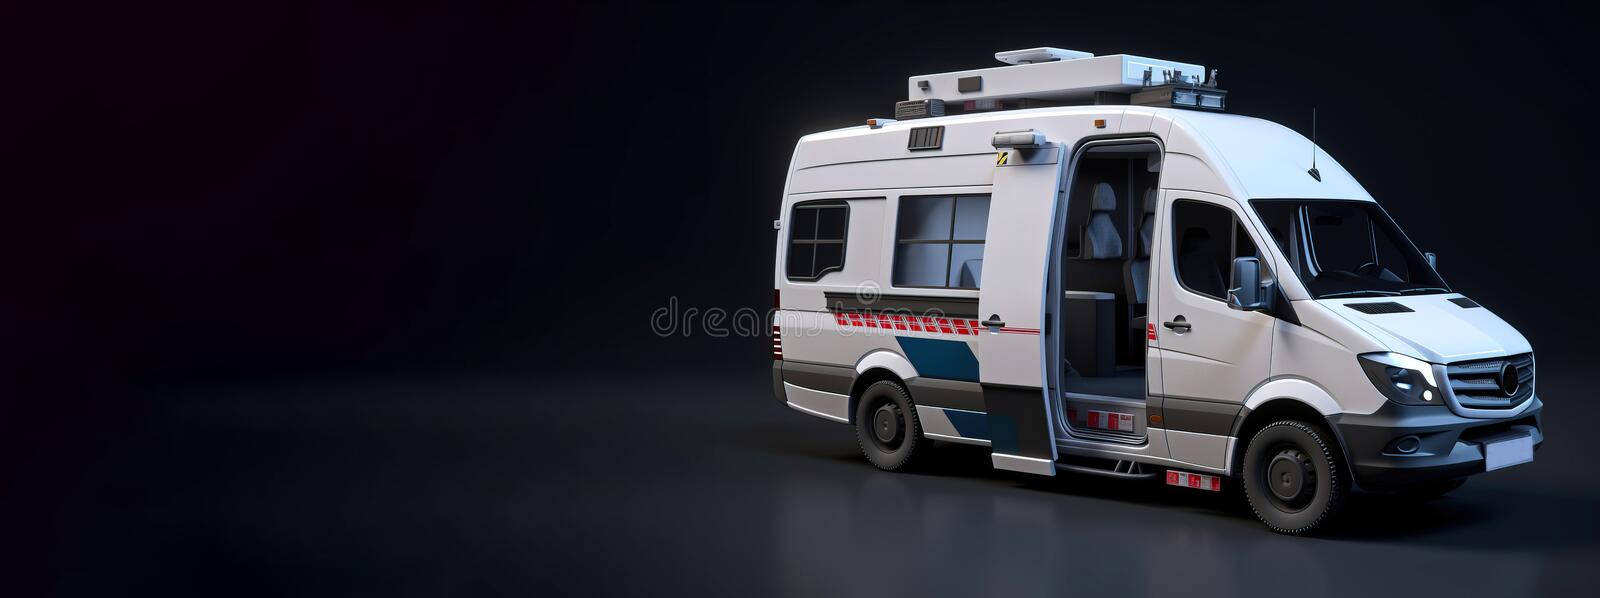 city-medical-ambulance-car-healthcare-transport-ai-generated-illustration-dark-background-header-banner-mockup-space-274171988